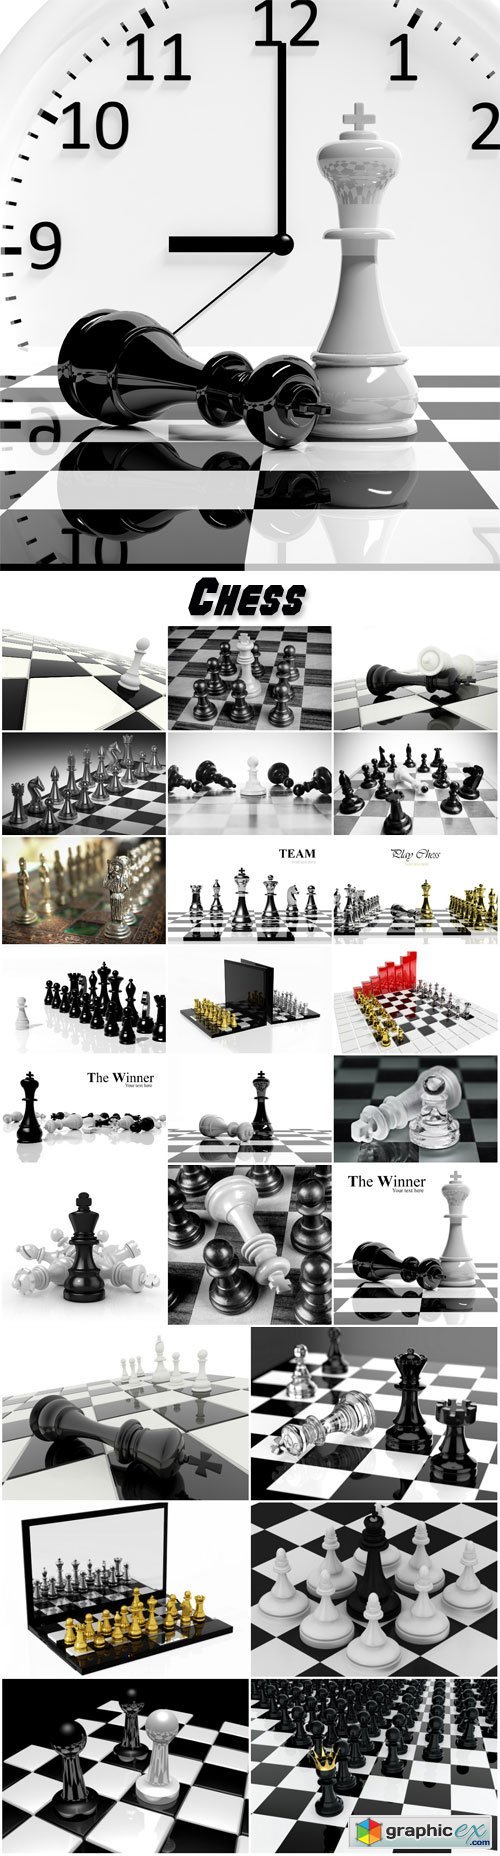 Chess, Chess Board